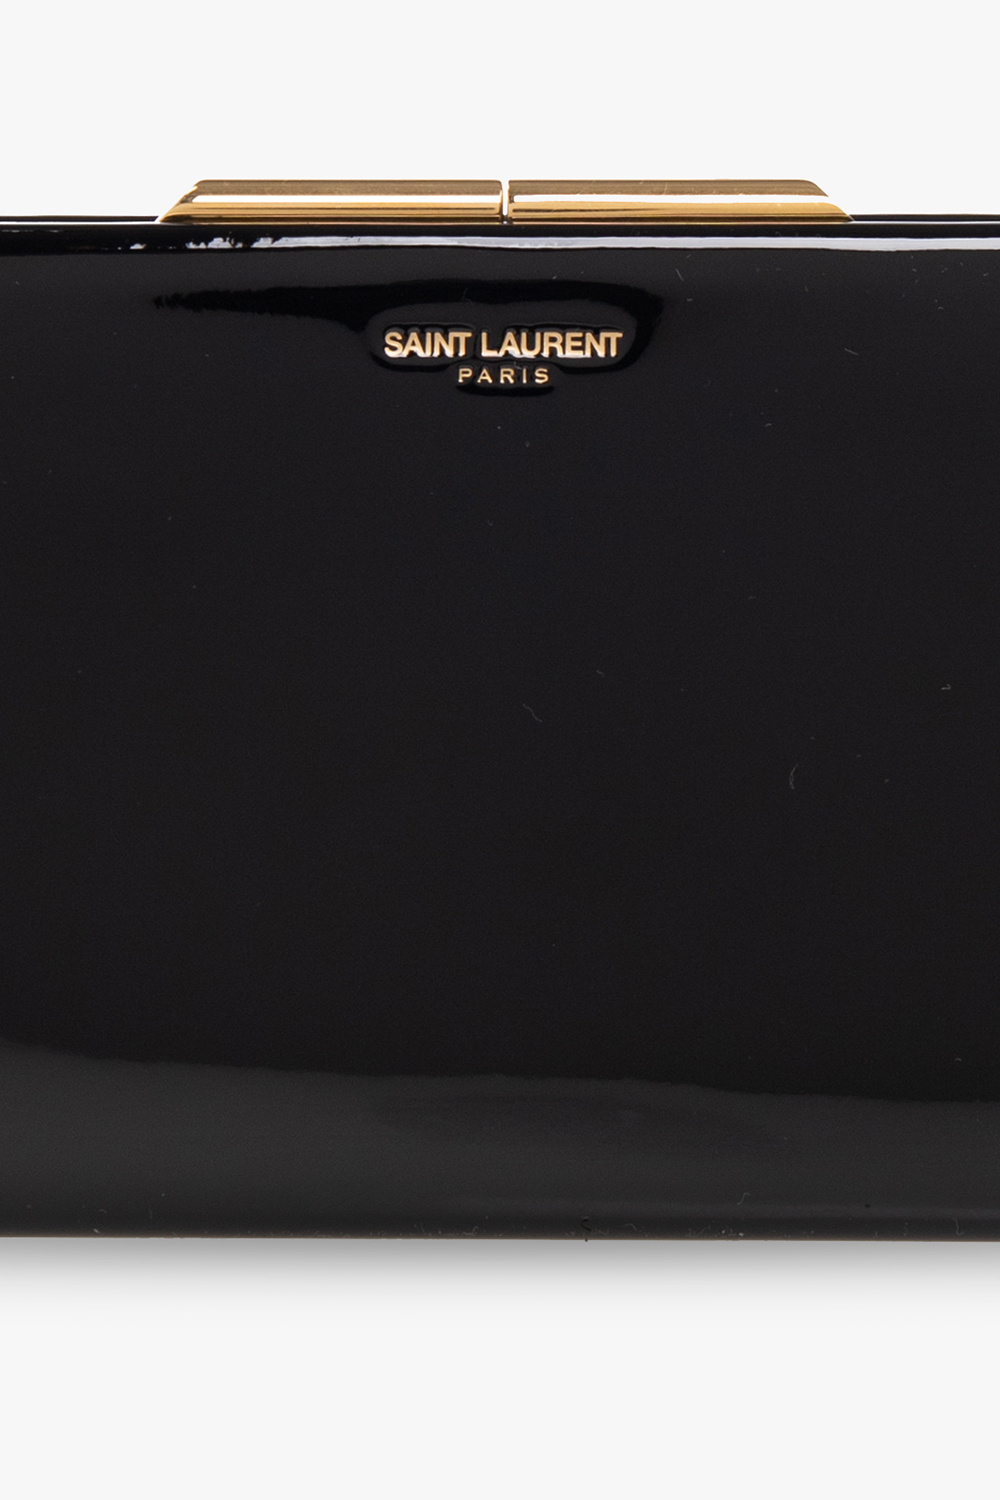 Saint Laurent ‘Midnight Small’ clutch